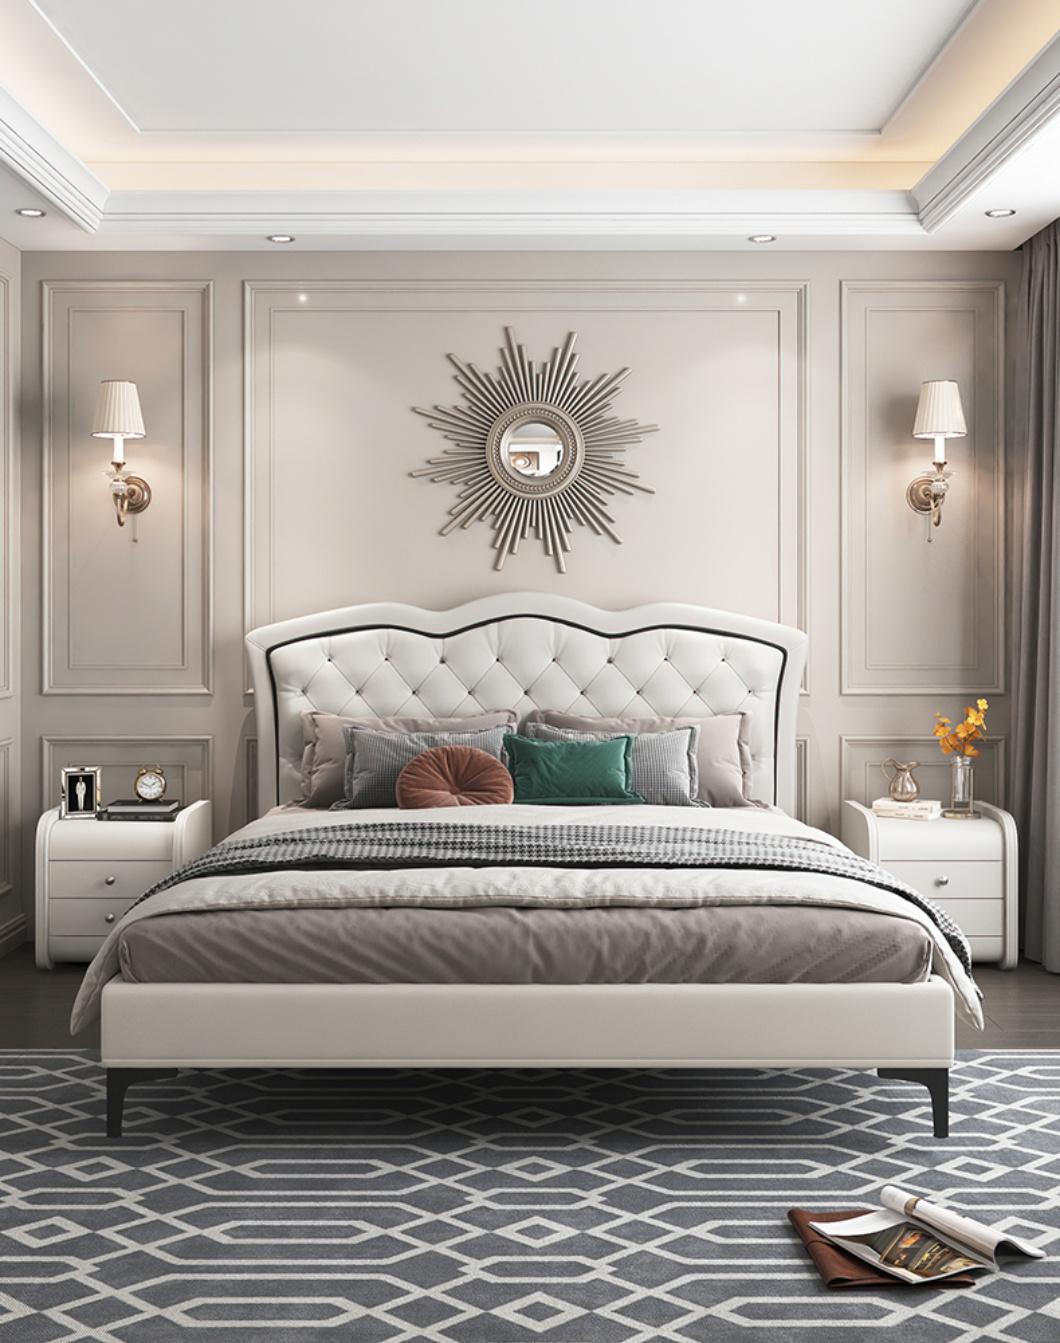 Hot Sale Wall Bed King Bed Bedroom Leather Bed Modern Home Furniture Bedroom Furniture Bed